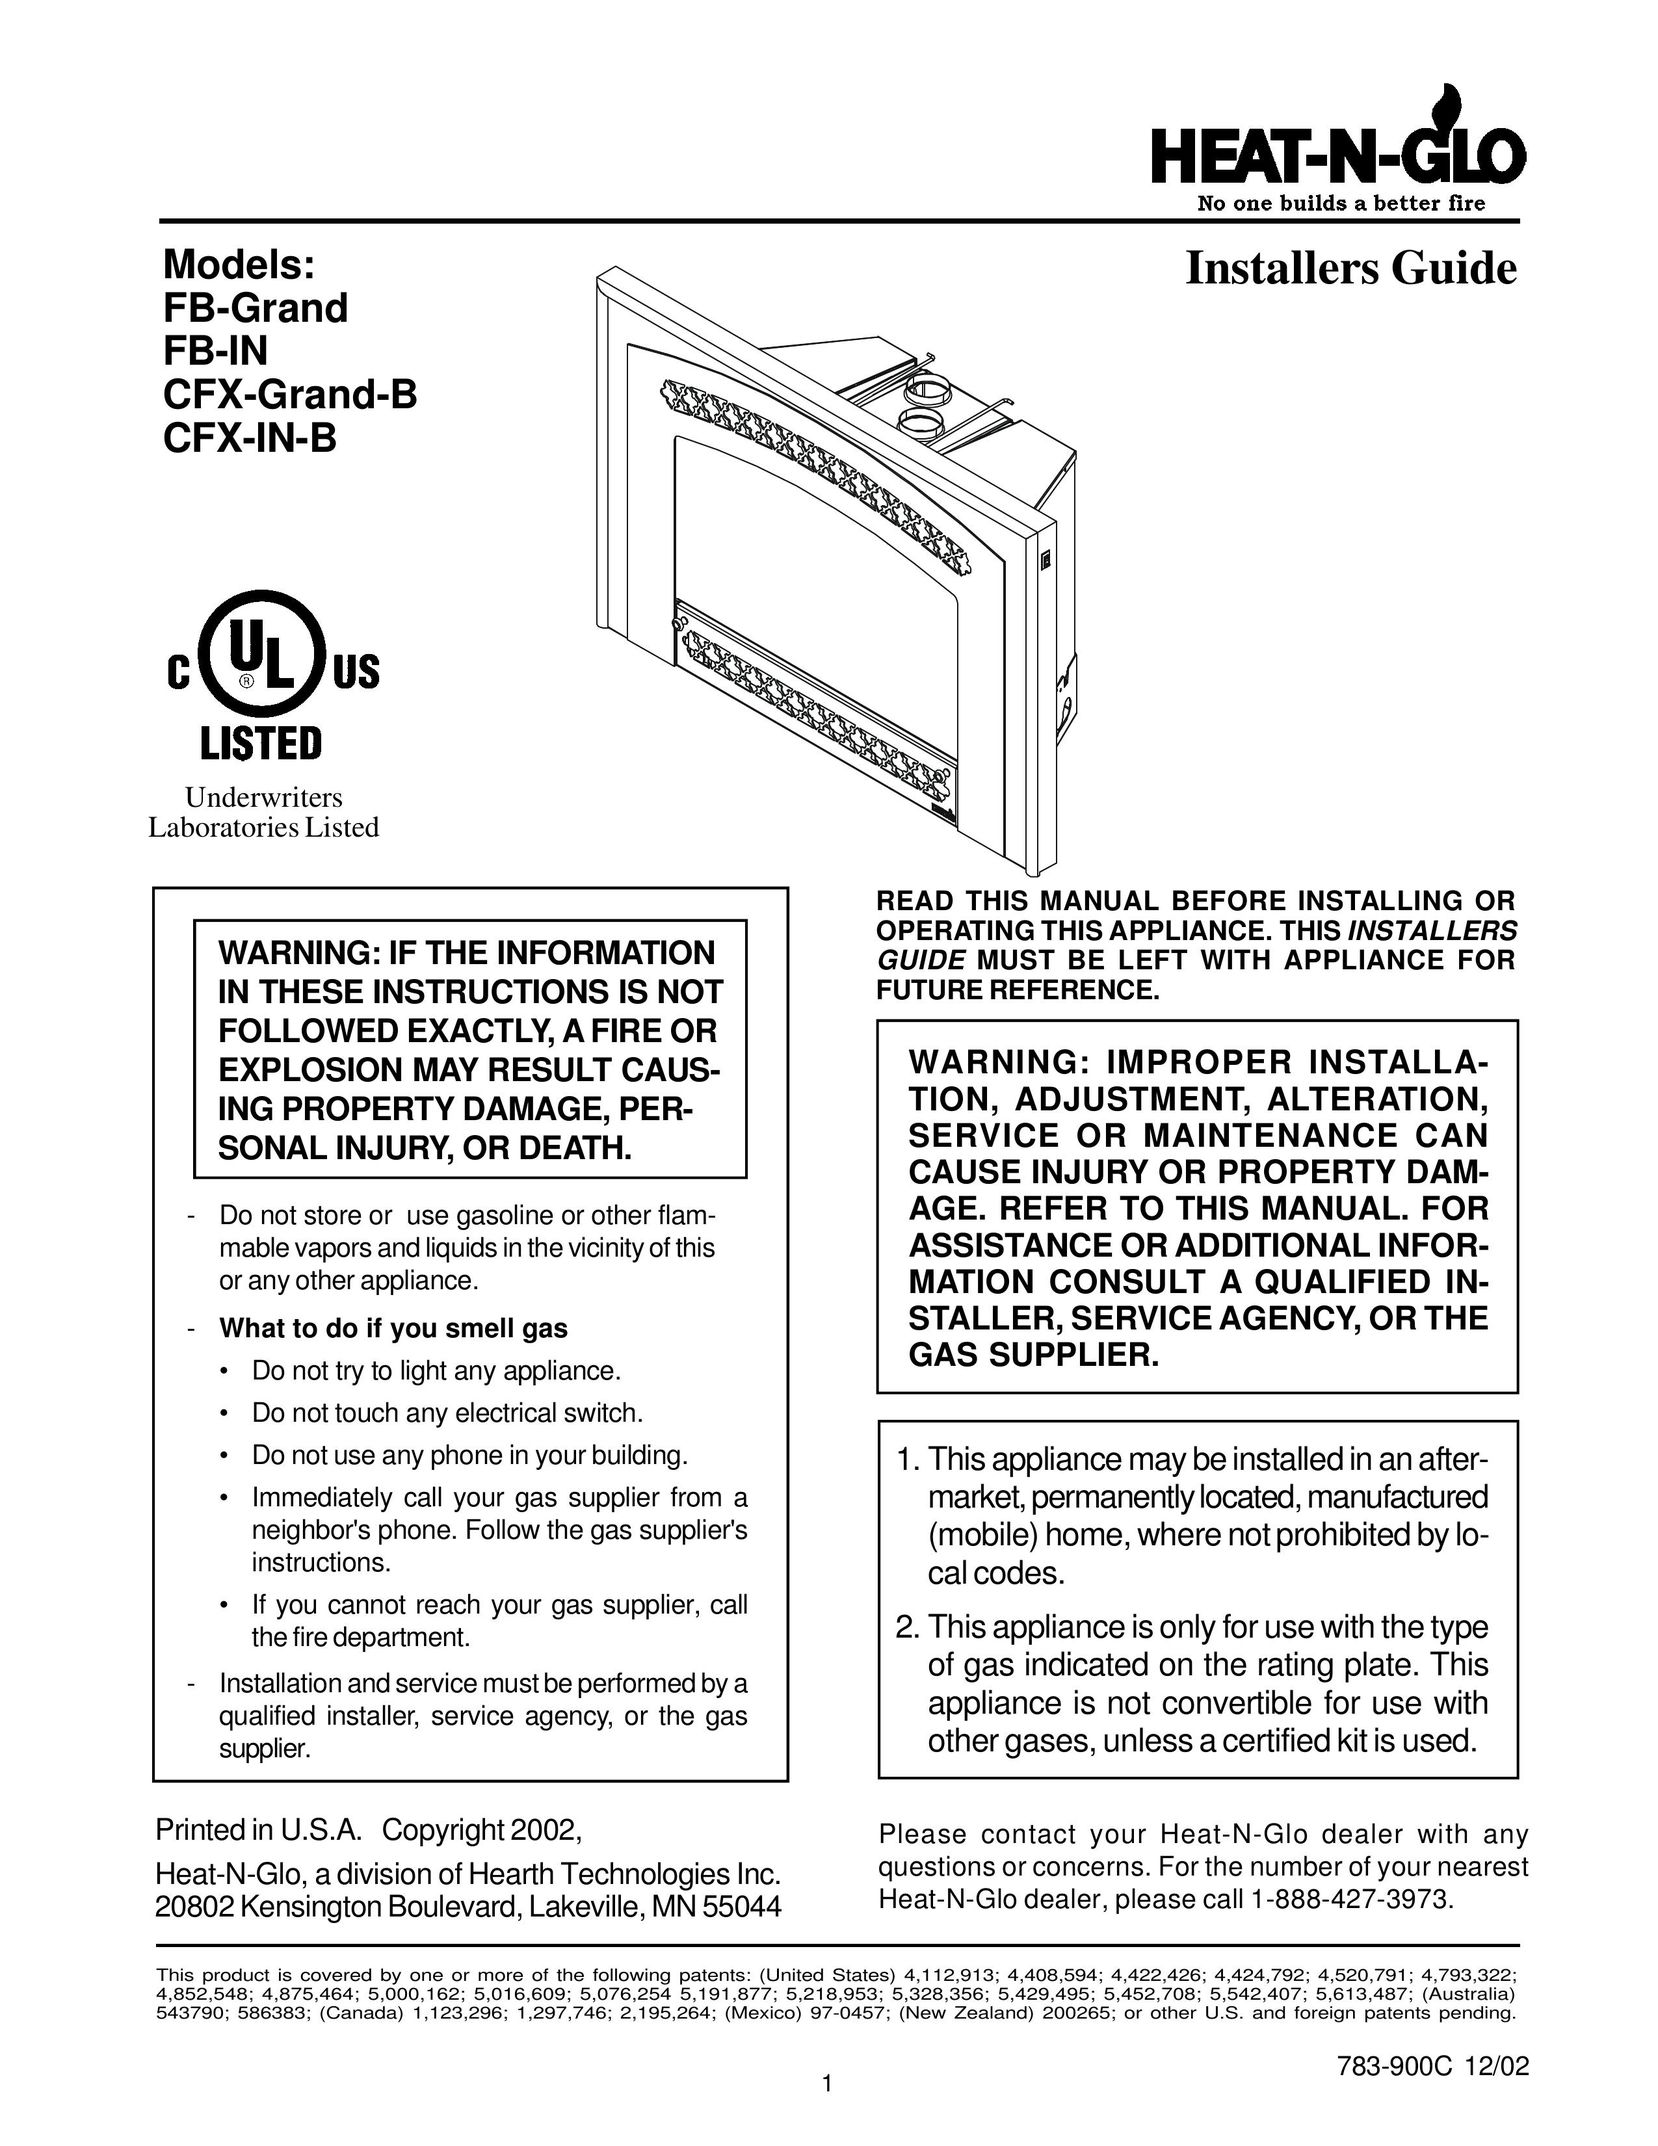 Heat & Glo LifeStyle CFX-Grand-B Stove User Manual